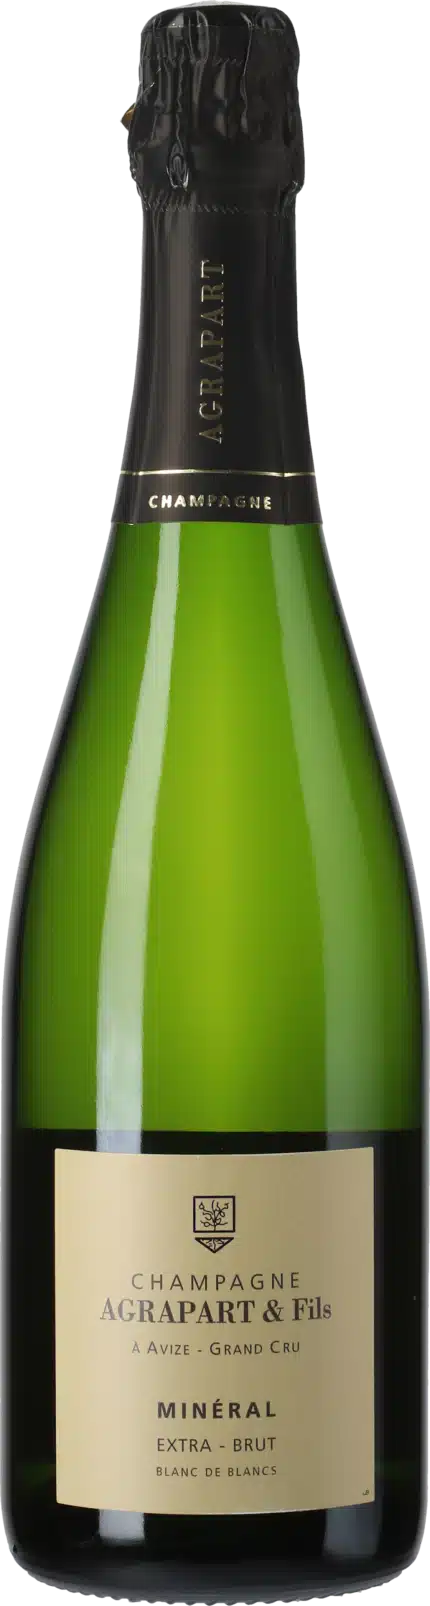 Agrapart & Fils Champagne Extra Brut Avizoise Blanc de Blancs Grand Cru (2005)_Lobenbergs Gute Weine GmbH & Co. KG